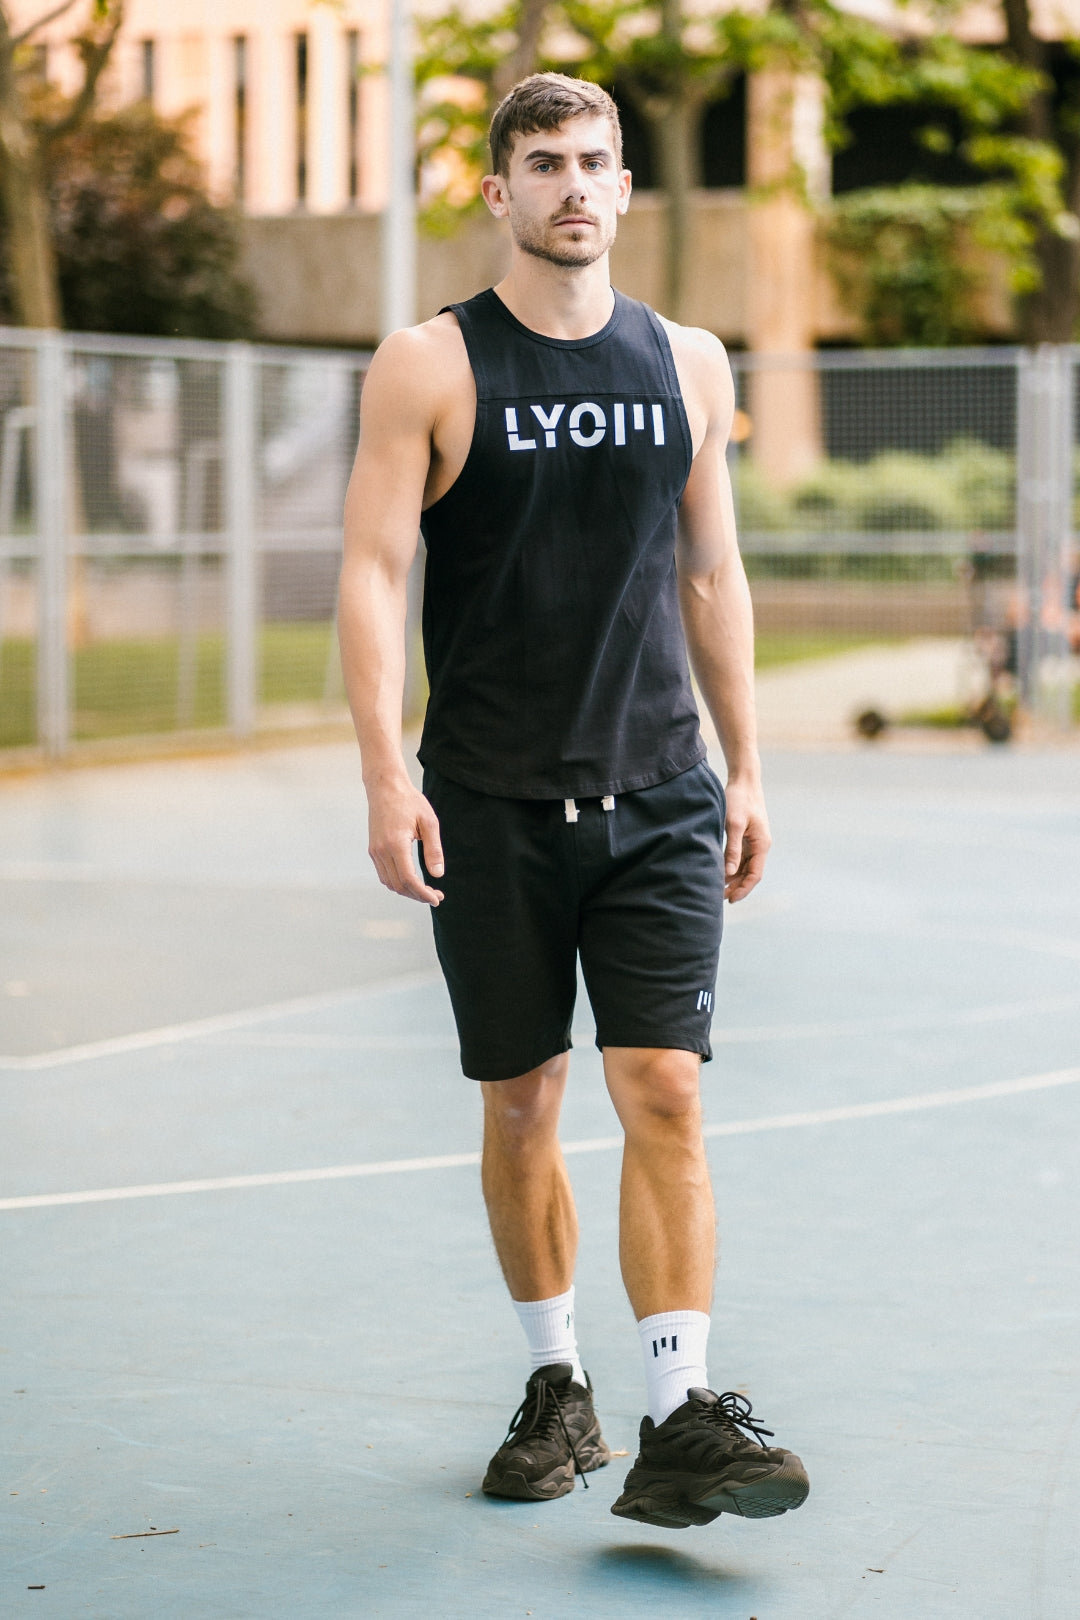 LYOM™ Fitness Tank - Black